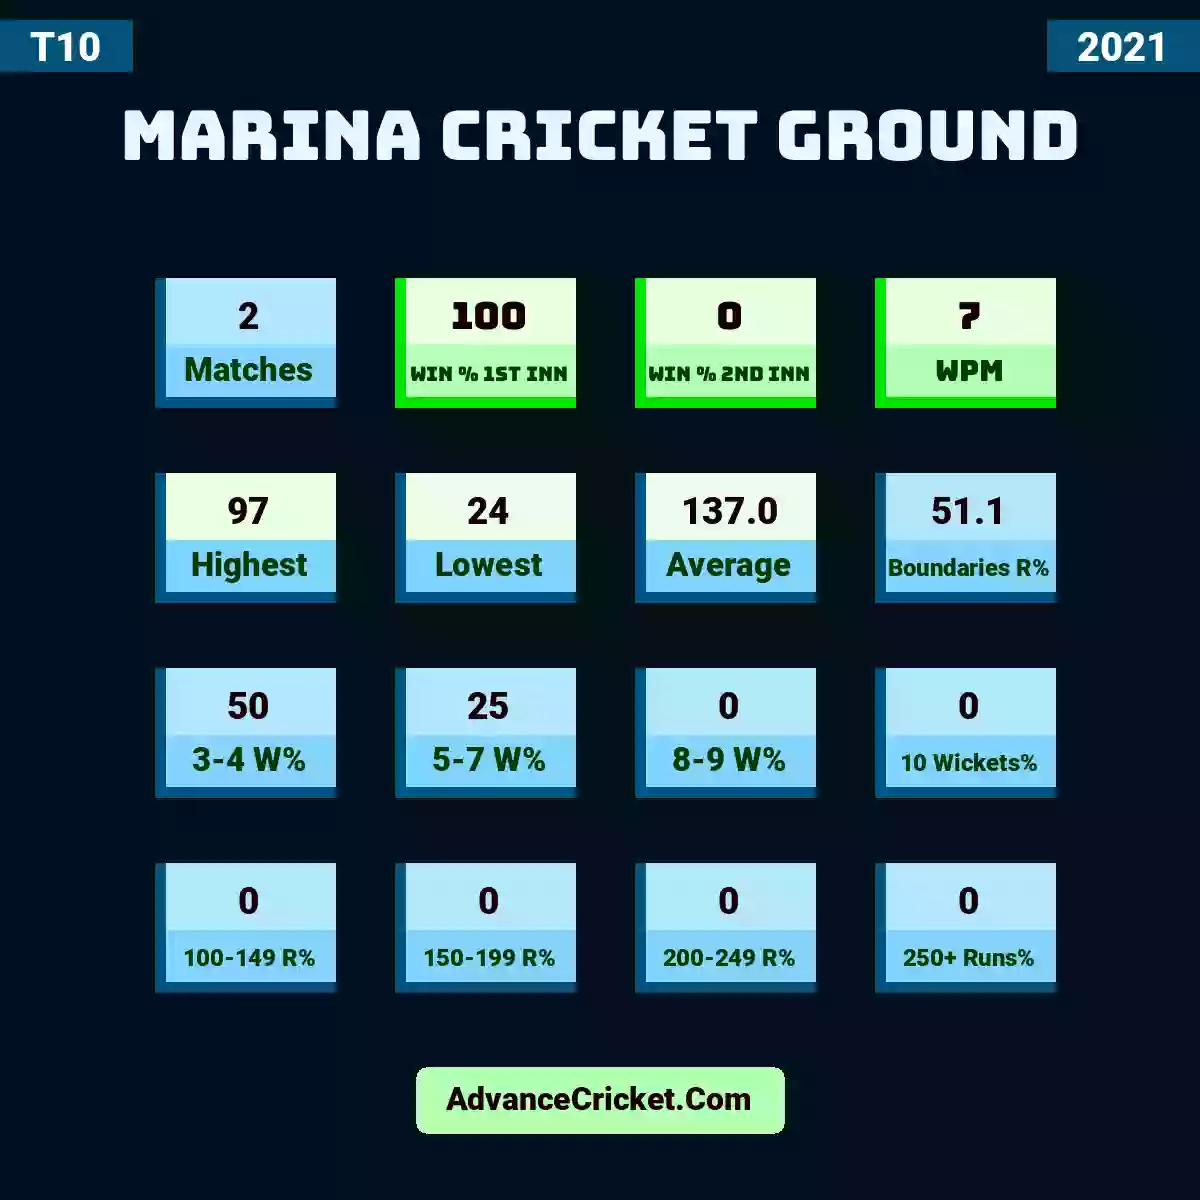 Image showing Marina Cricket Ground with Matches: 2, Win % 1st Inn: 100, Win % 2nd Inn: 0, WPM: 7, Highest: 97, Lowest: 24, Average: 137.0, Boundaries R%: 51.1, 3-4 W%: 50, 5-7 W%: 25, 8-9 W%: 0, 10 Wickets%: 0, 100-149 R%: 0, 150-199 R%: 0, 200-249 R%: 0, 250+ Runs%: 0.